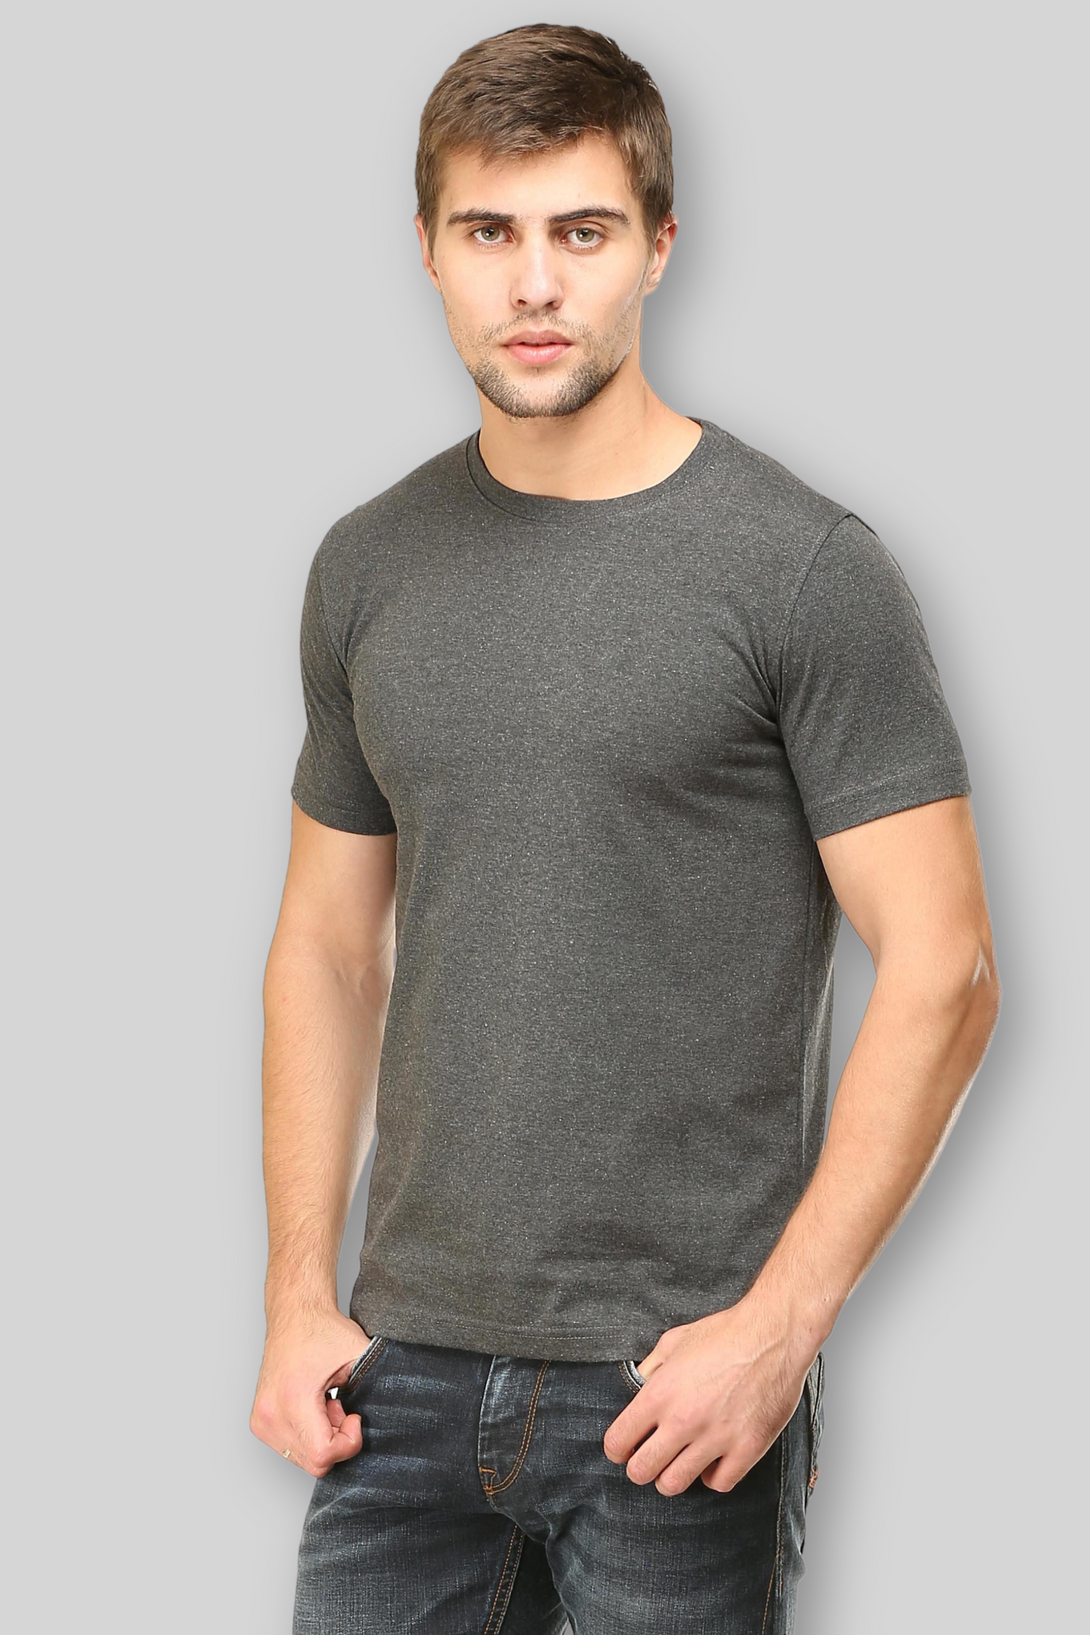 Charcoal Melange T Shirt For Men - WowWaves - 2